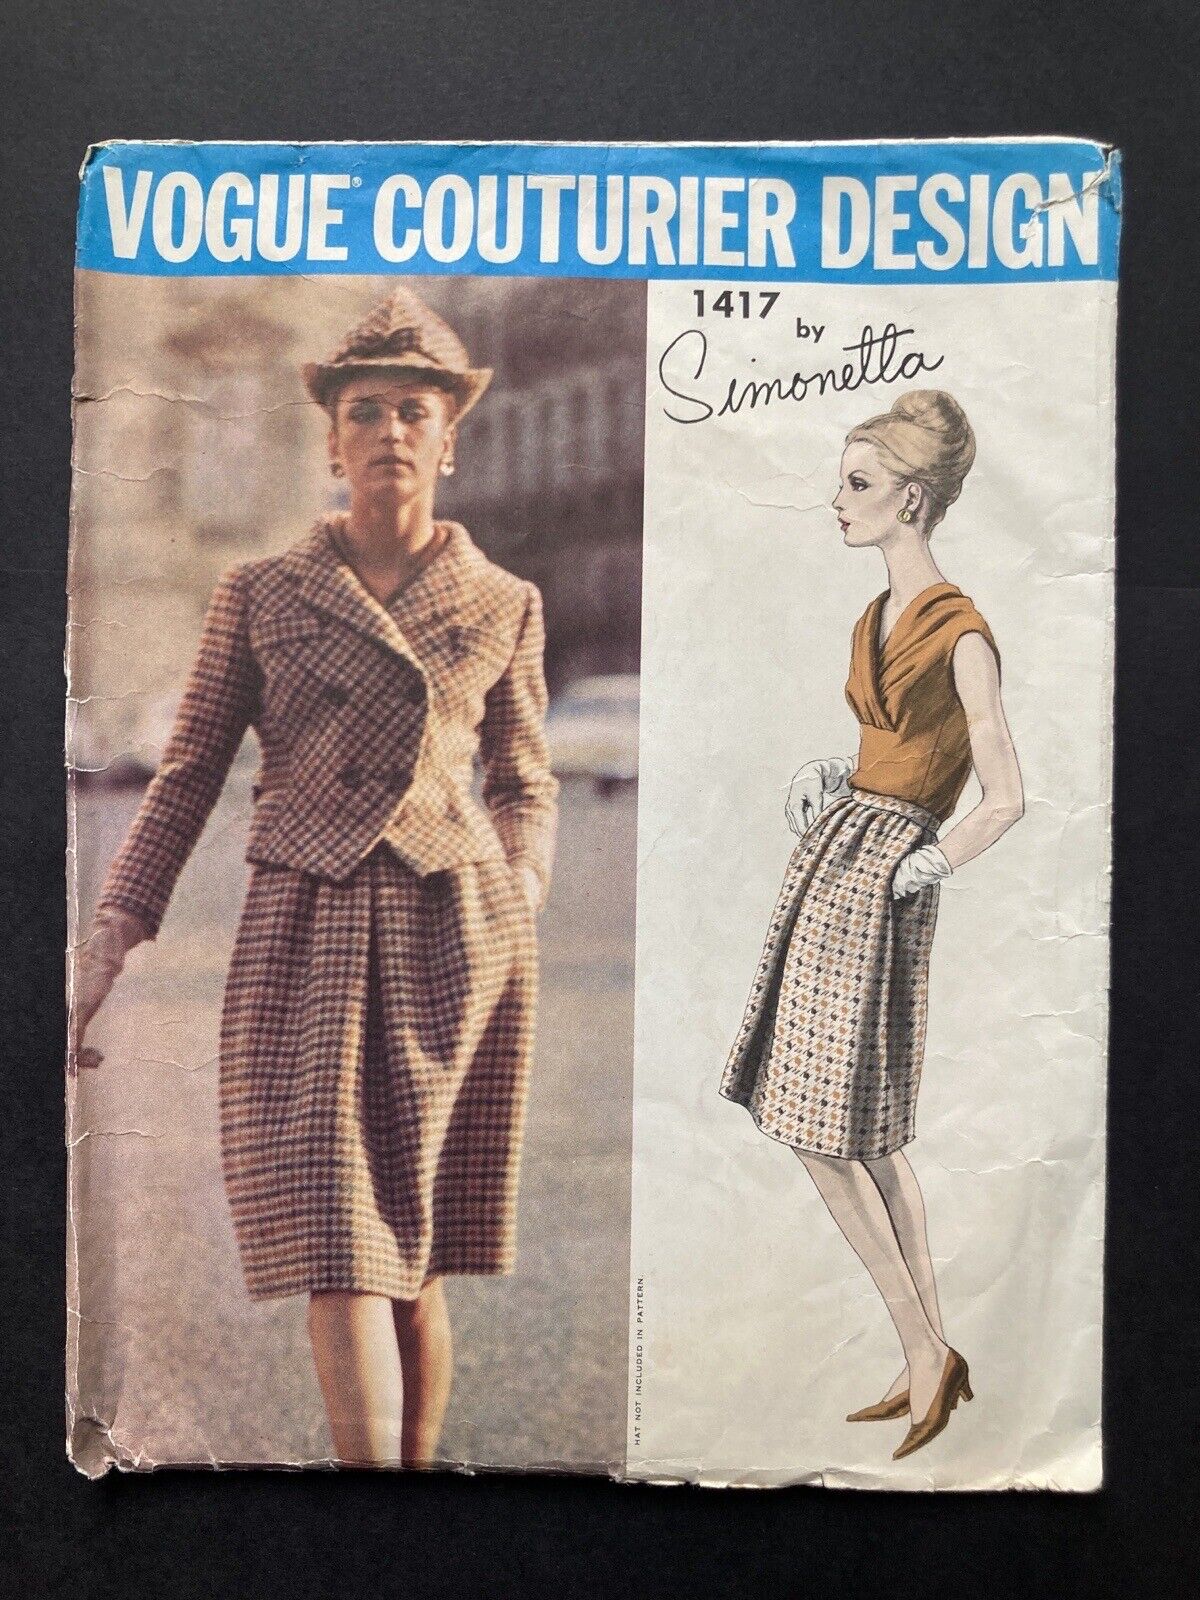 Rare Vintage Vogue SIMONETTA Sewing Pattern 1417 Jacket Skirt Blouse 1965